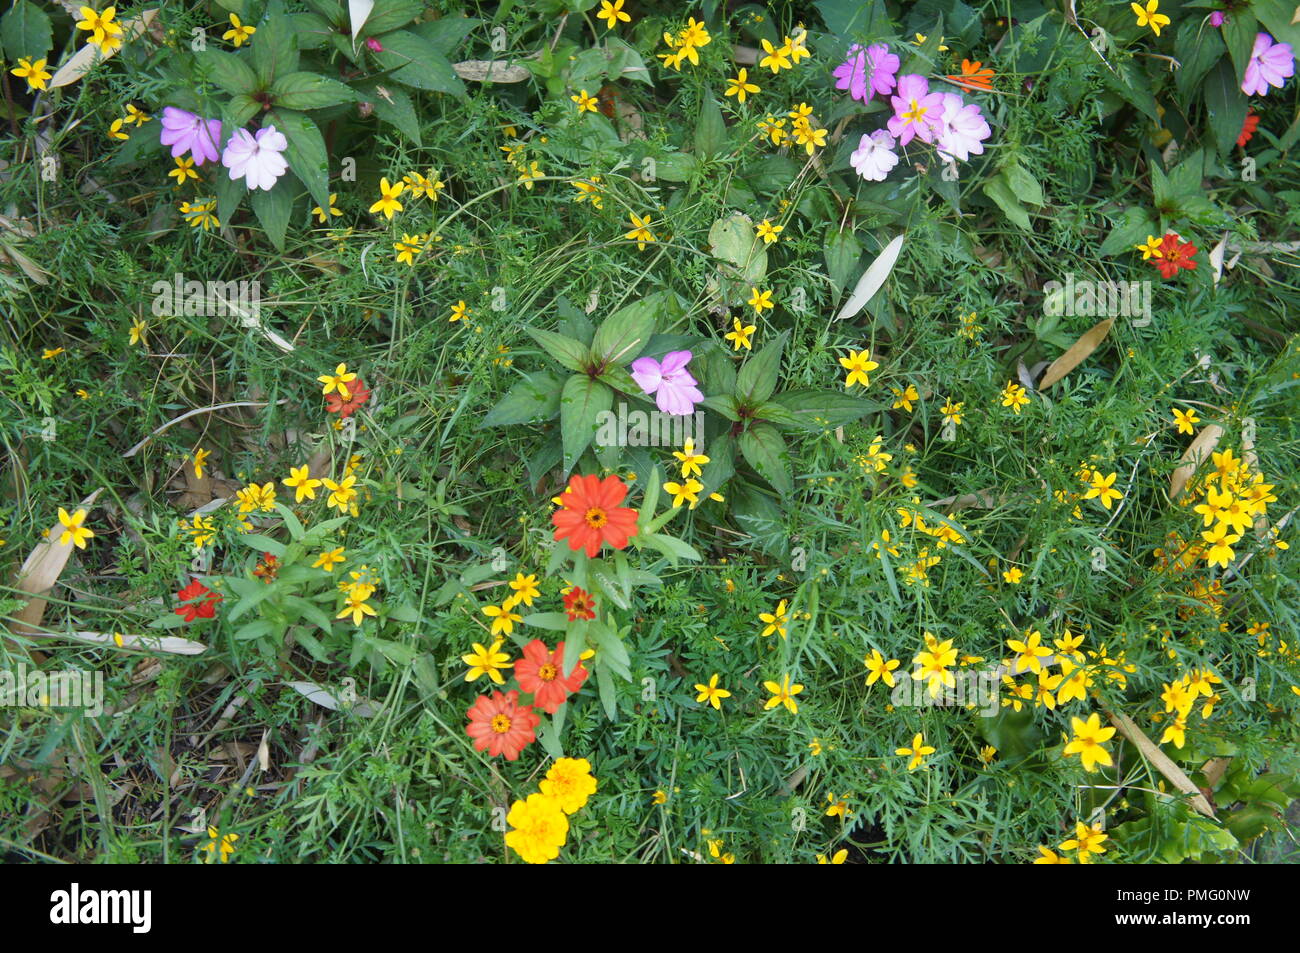 massif de fleurs des champs multicolores, a massif of multicoloured field flowers, ein Massiv aus bunten Feldblumen,  un macizo de flores de campo mul Stock Photo